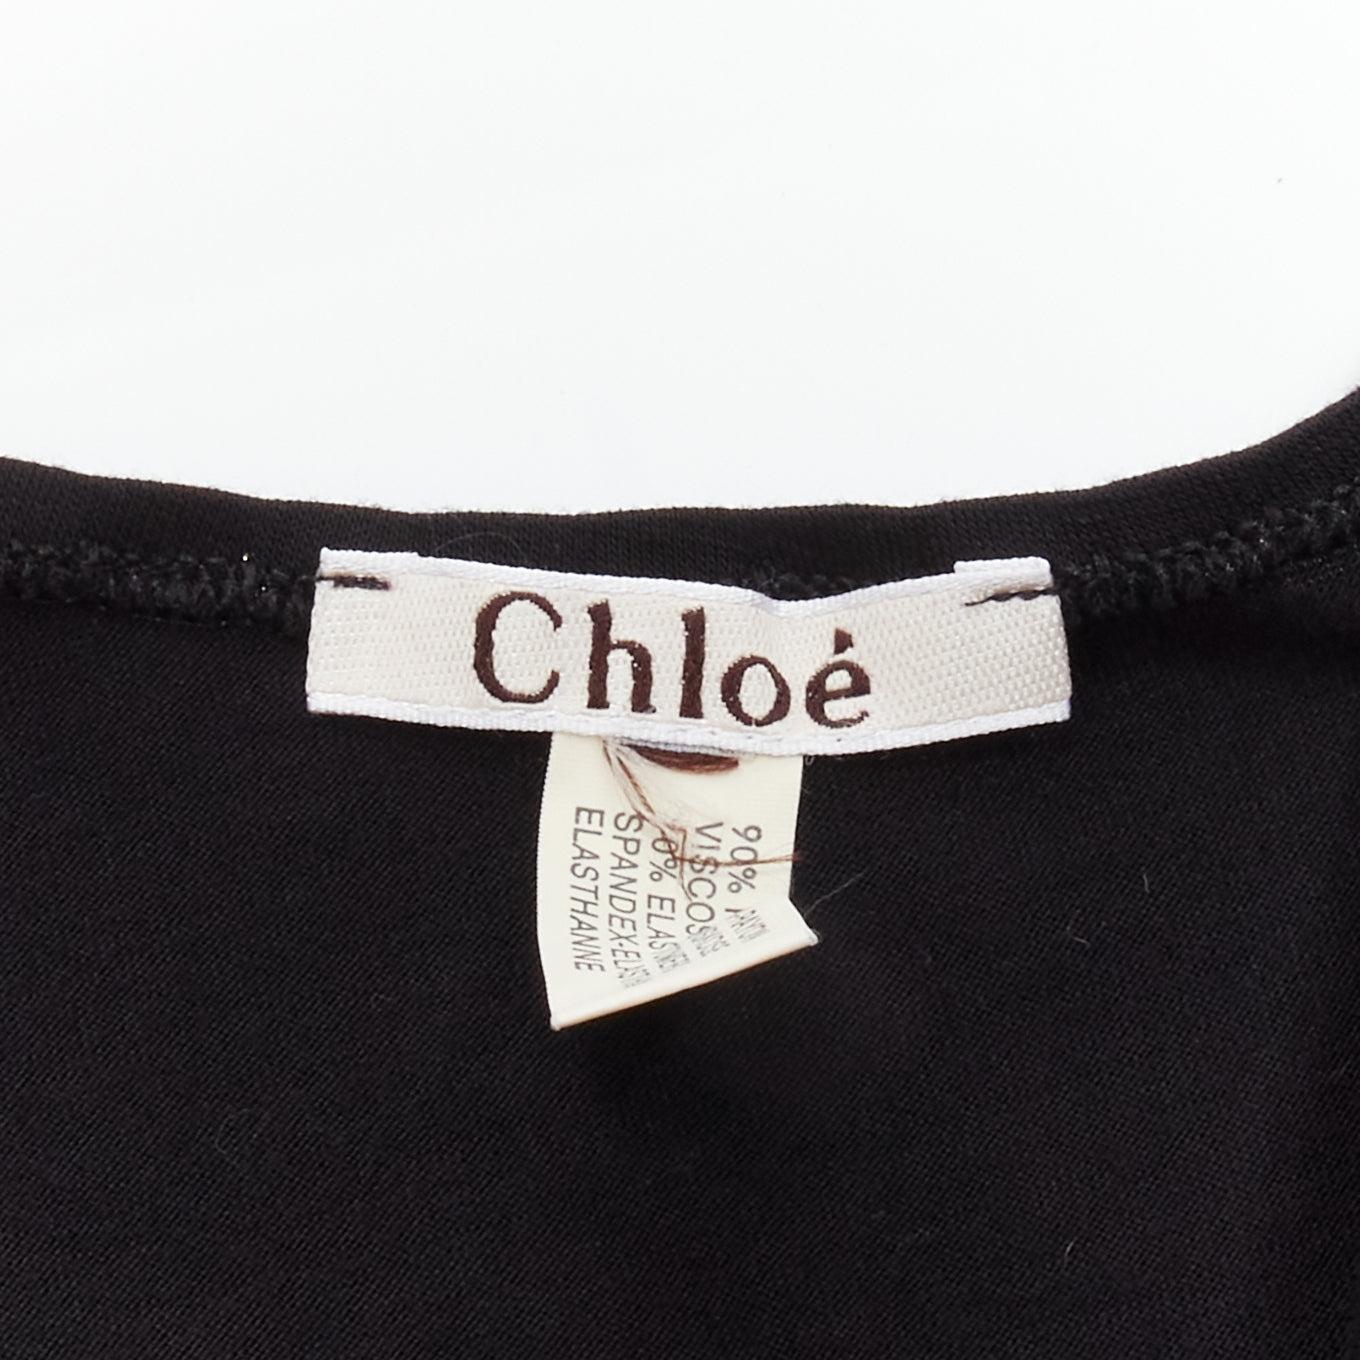 CHLOE gold foil logo black topstitch detail rock chic tank top dress S For Sale 4